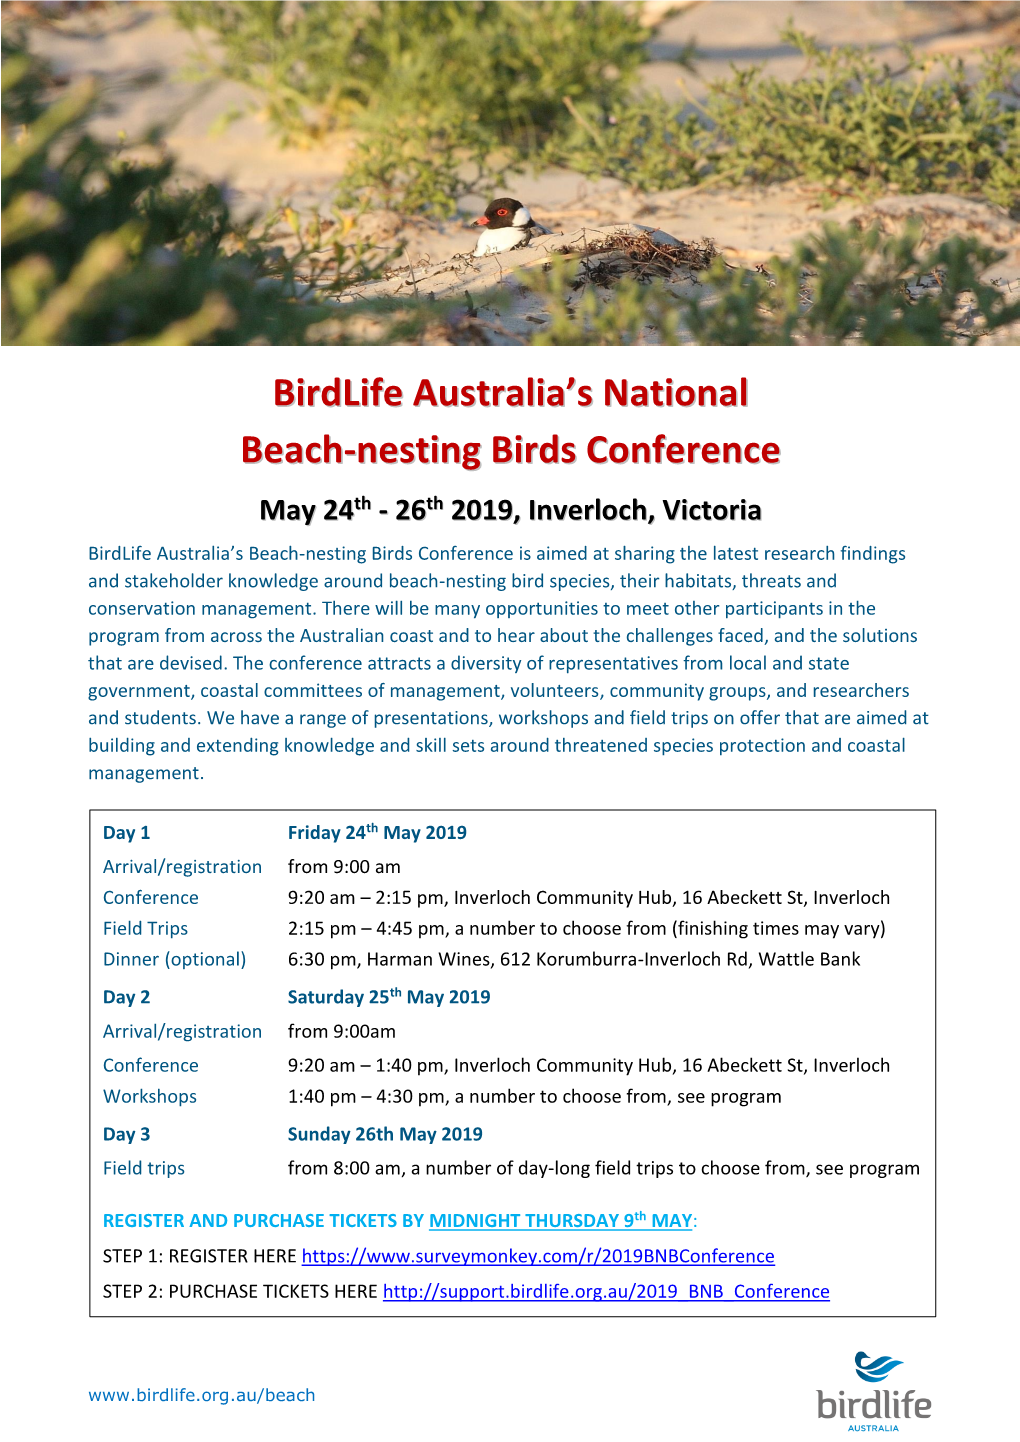 2019 Beach-Nesting Birds Conference Program With